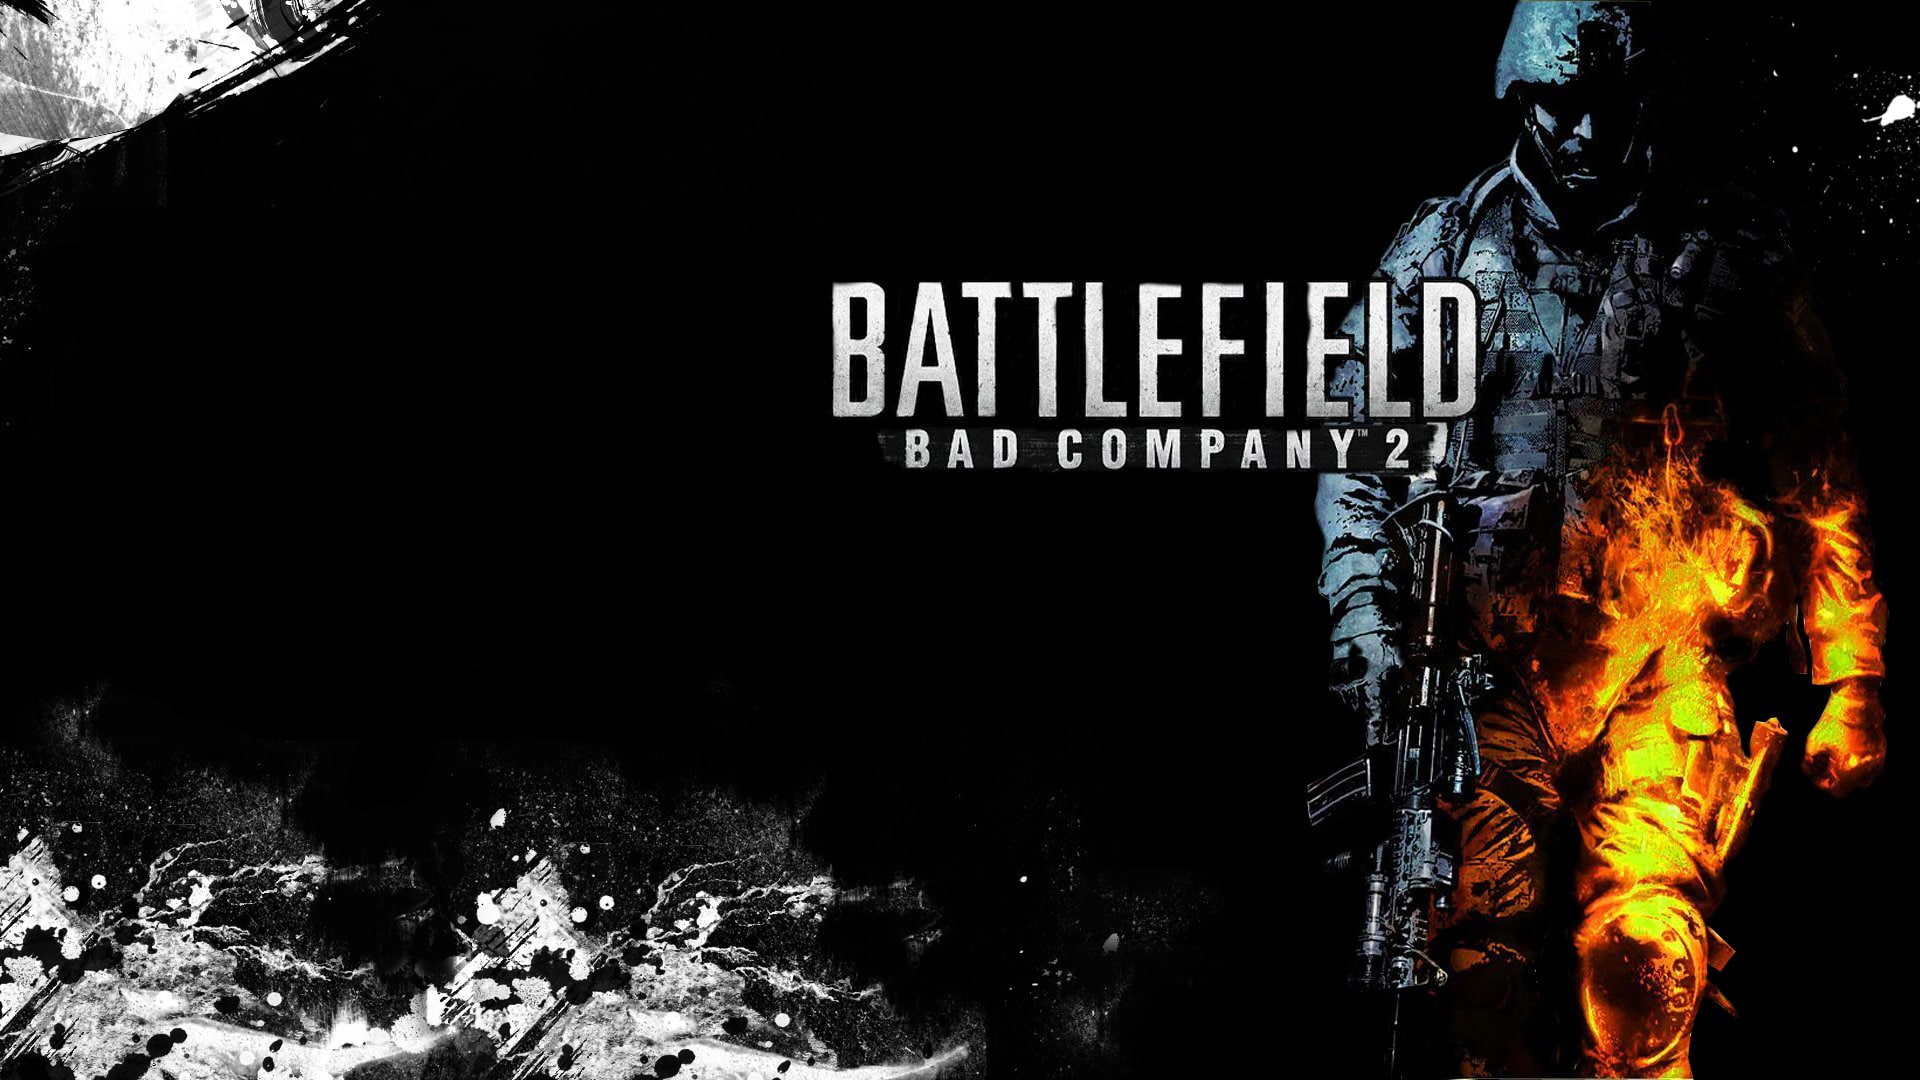 Battlefield, Battlefield: Bad Company 2, communication, burning